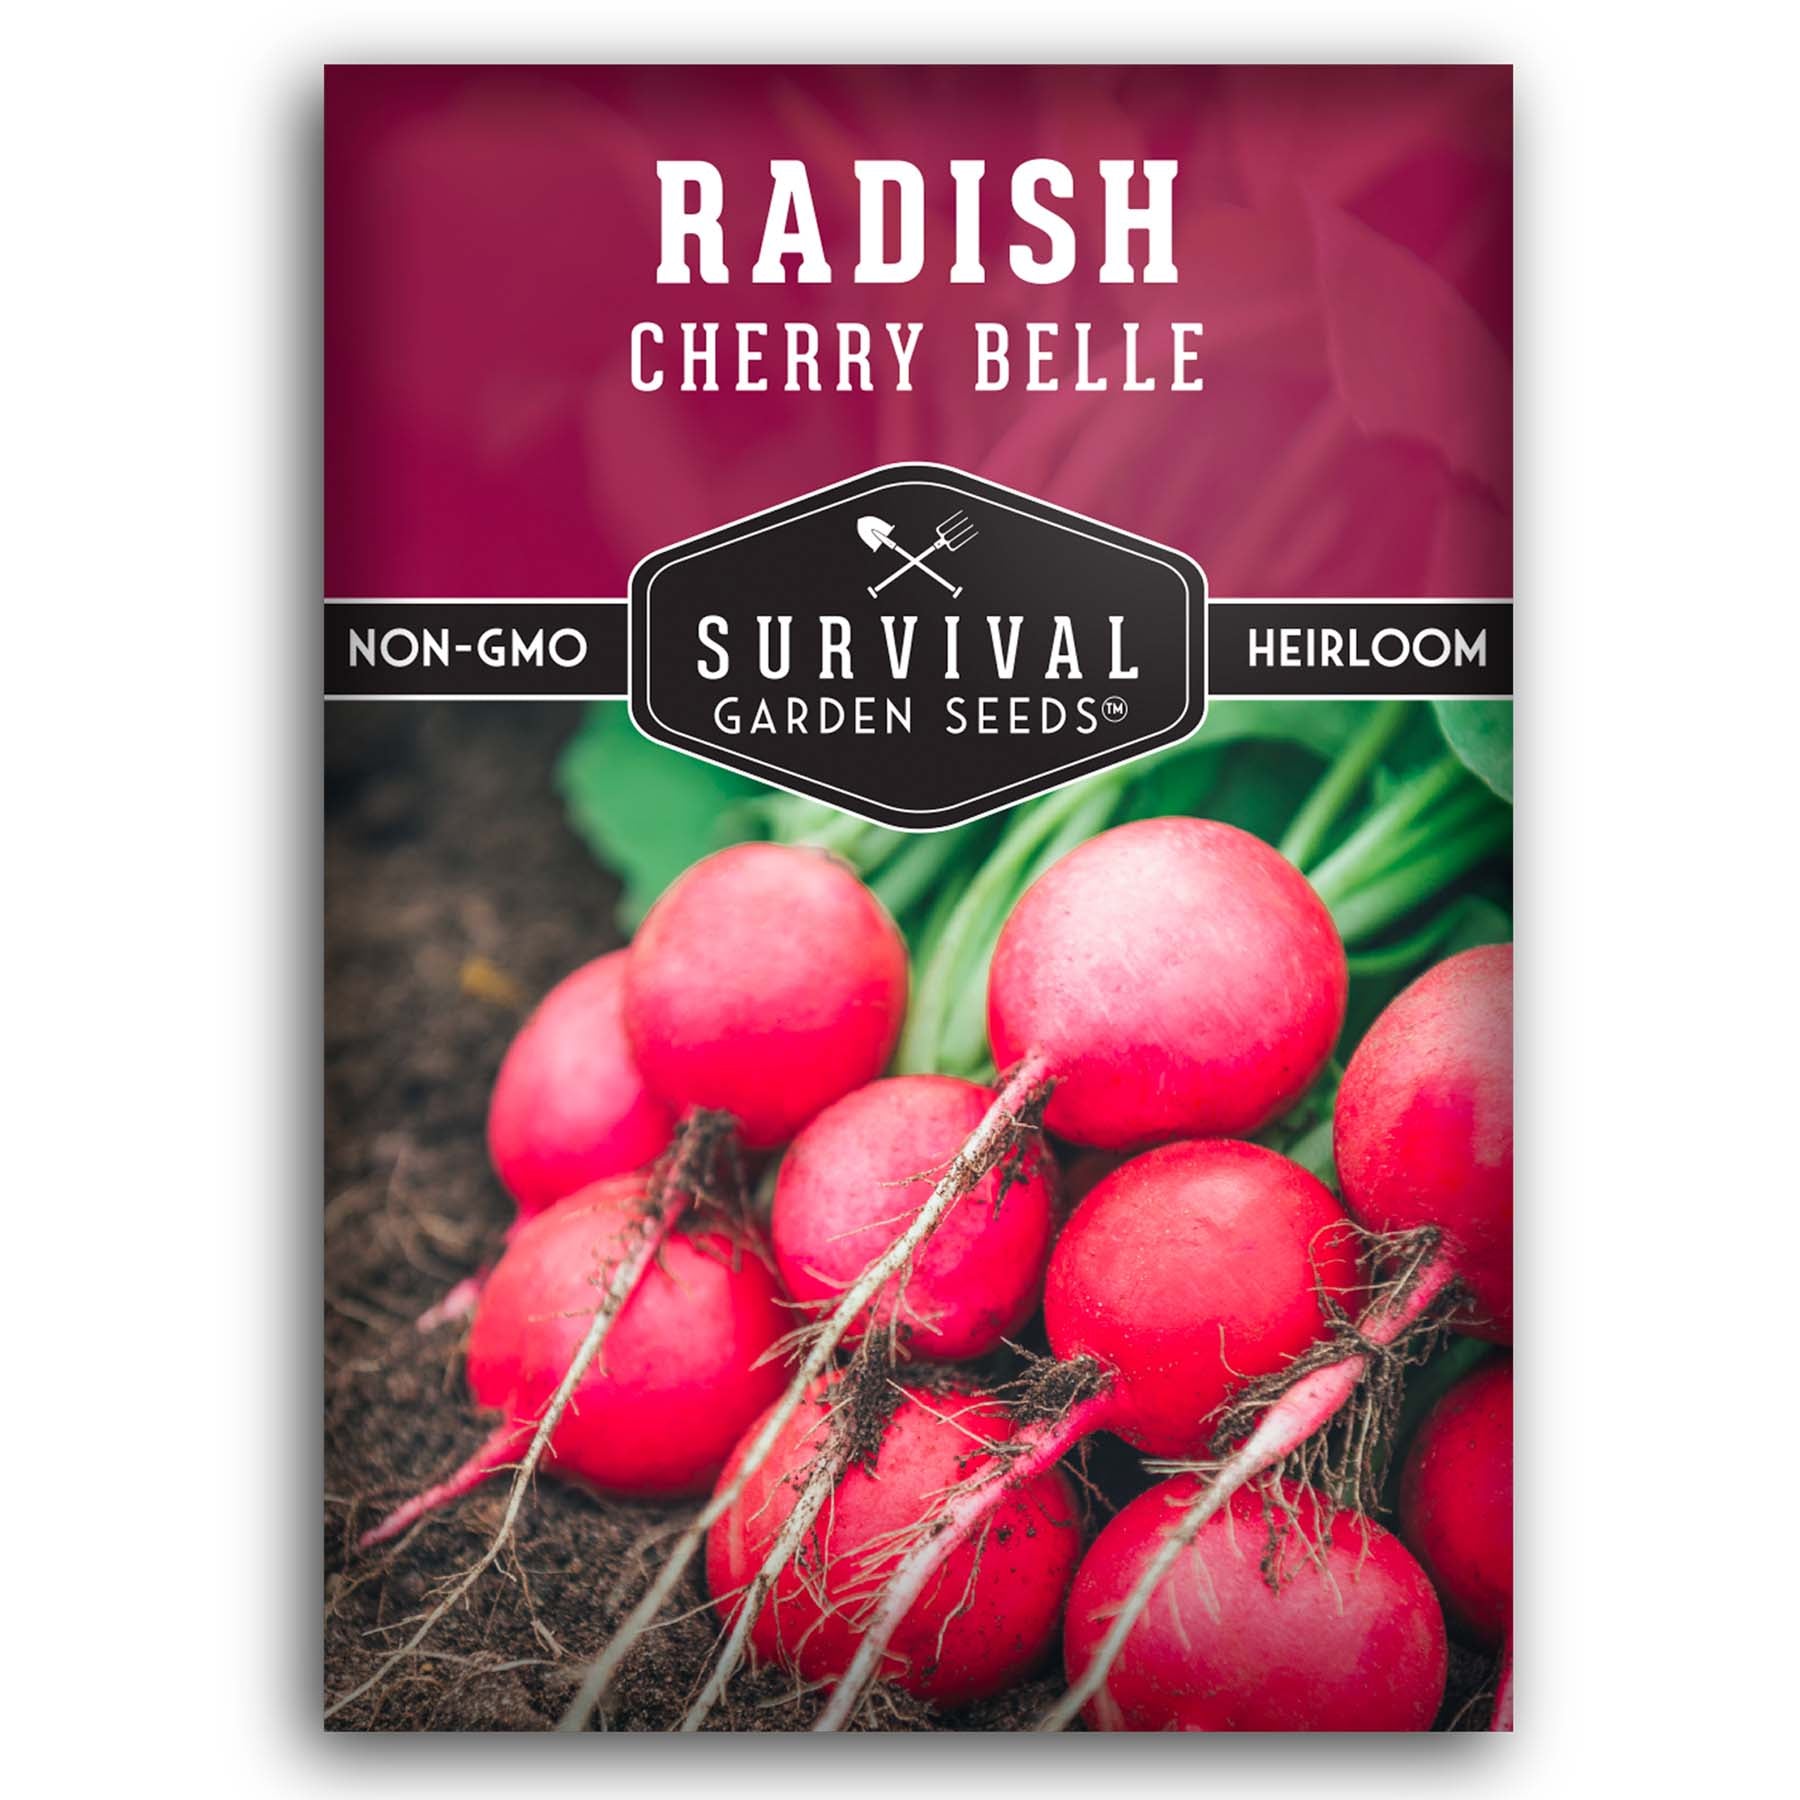 Cherry Belle Radish seeds for planting